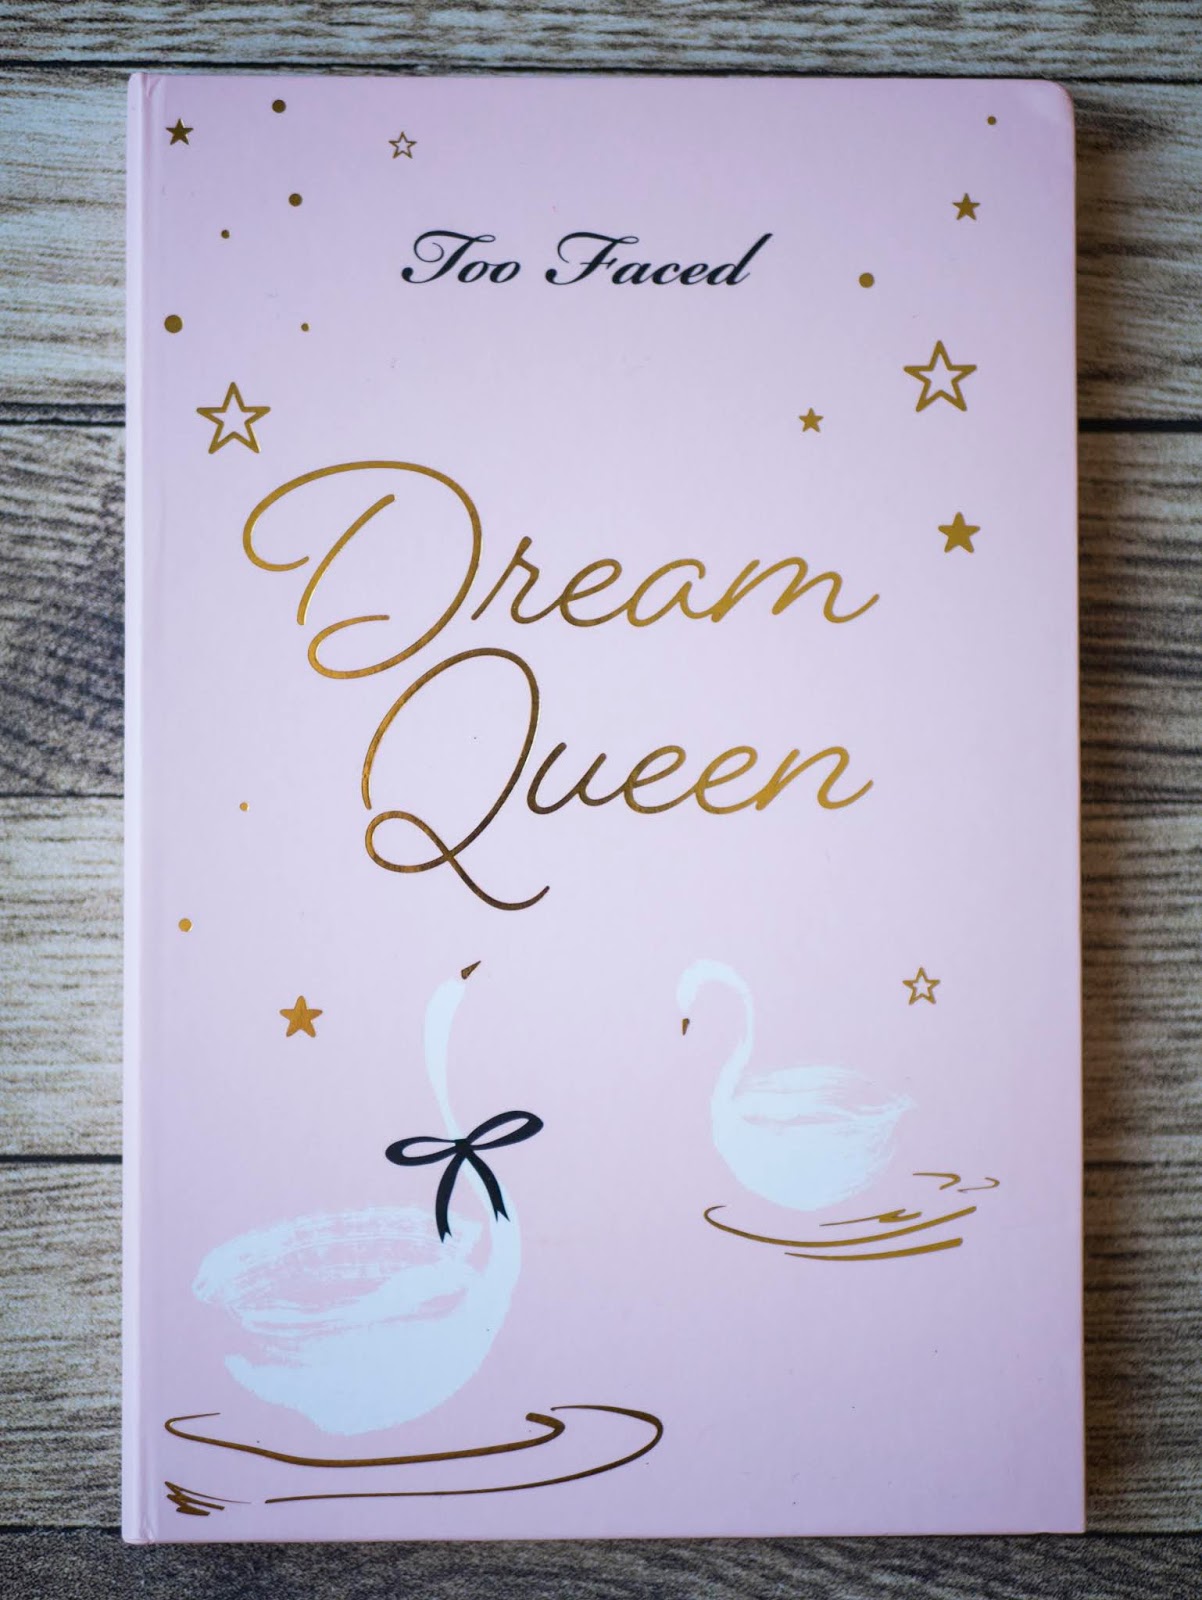 Too Faced - Dream Queen